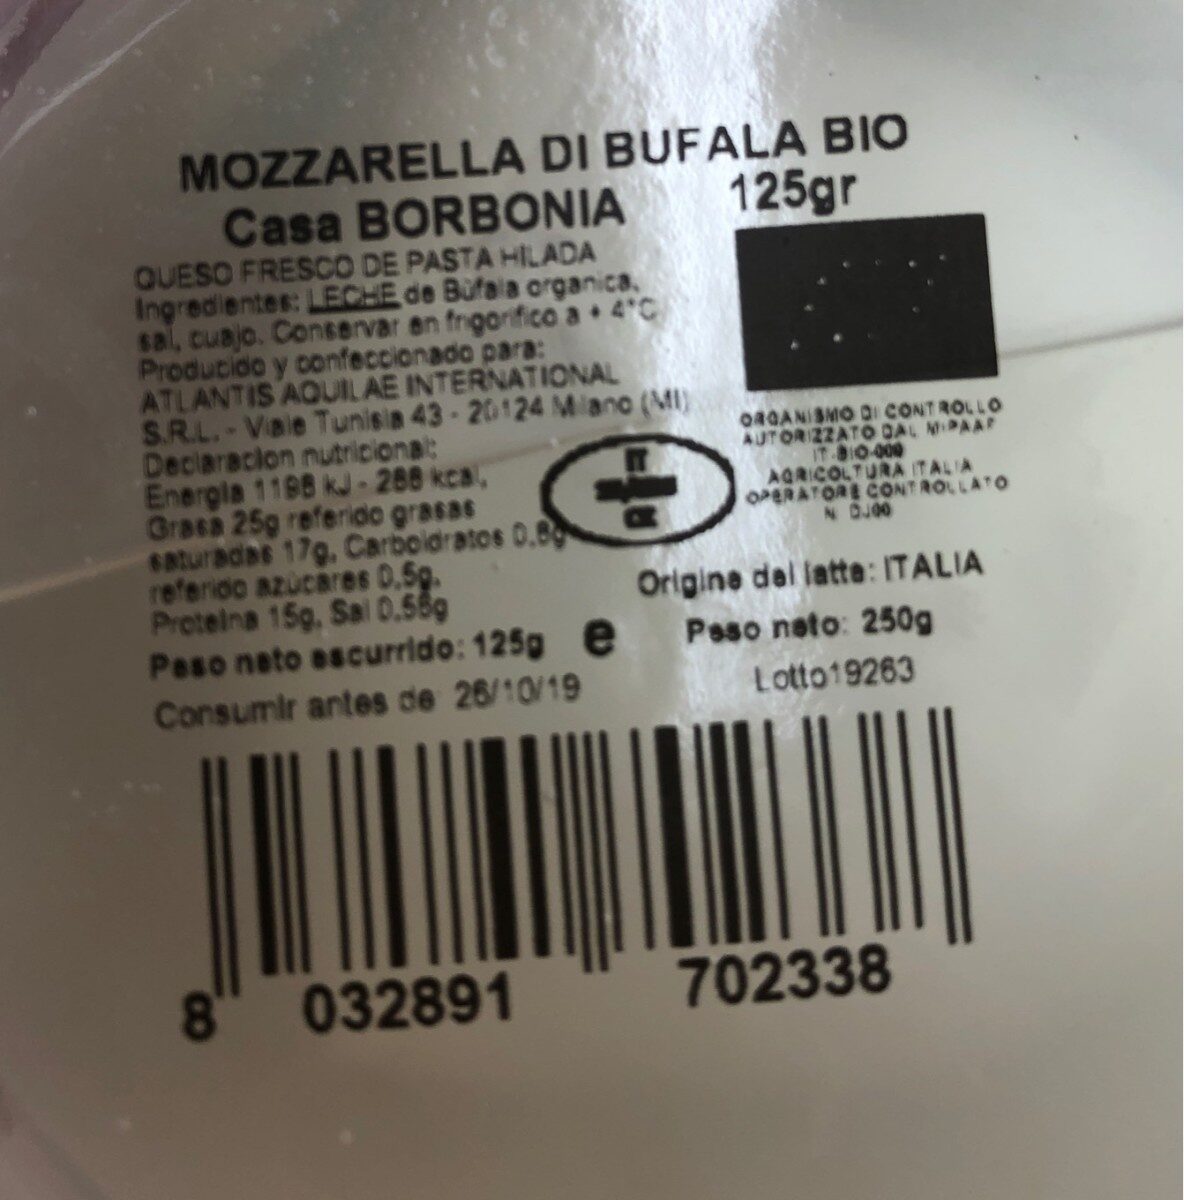 Mozzarellla di bufala - Tableau nutritionnel - es